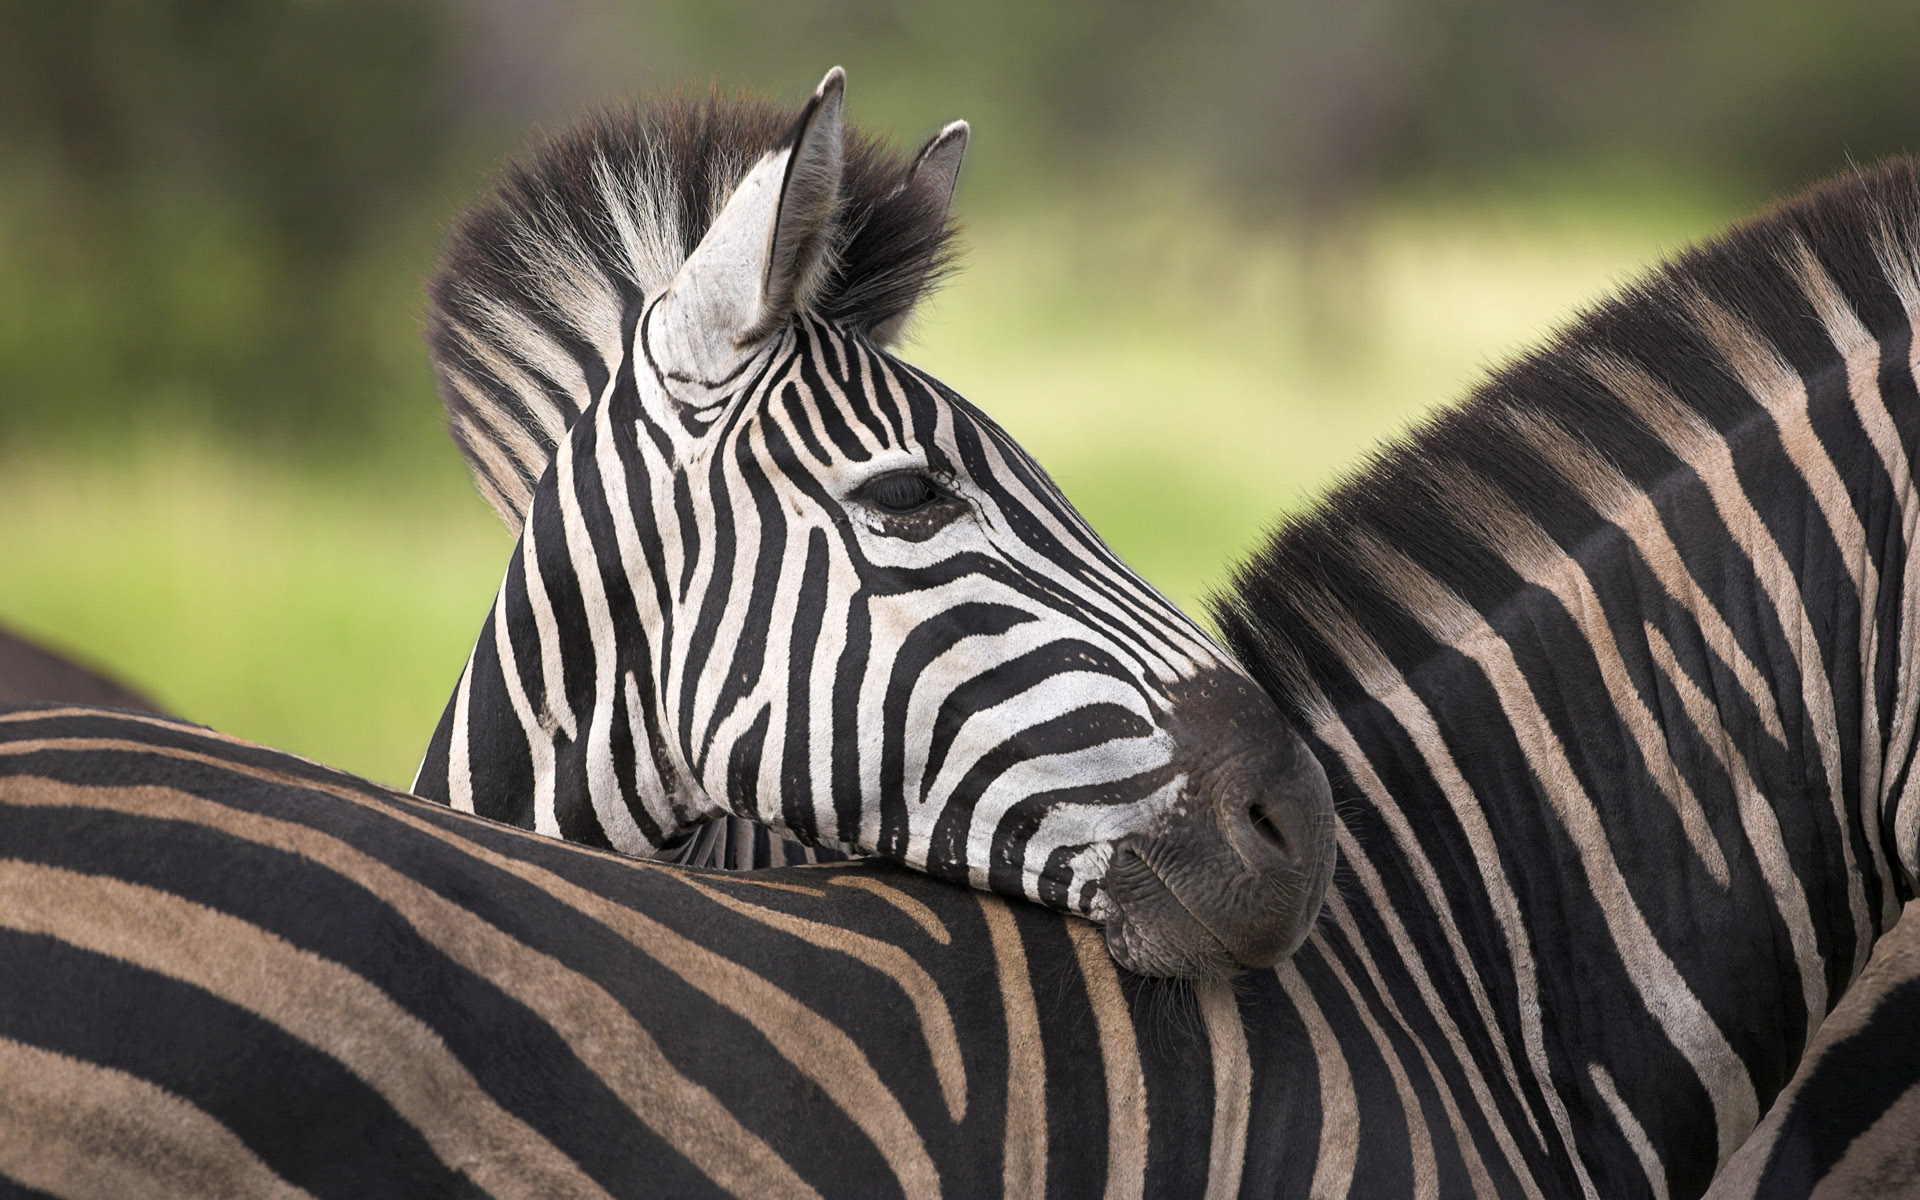 Zebra resting its head over another zebra